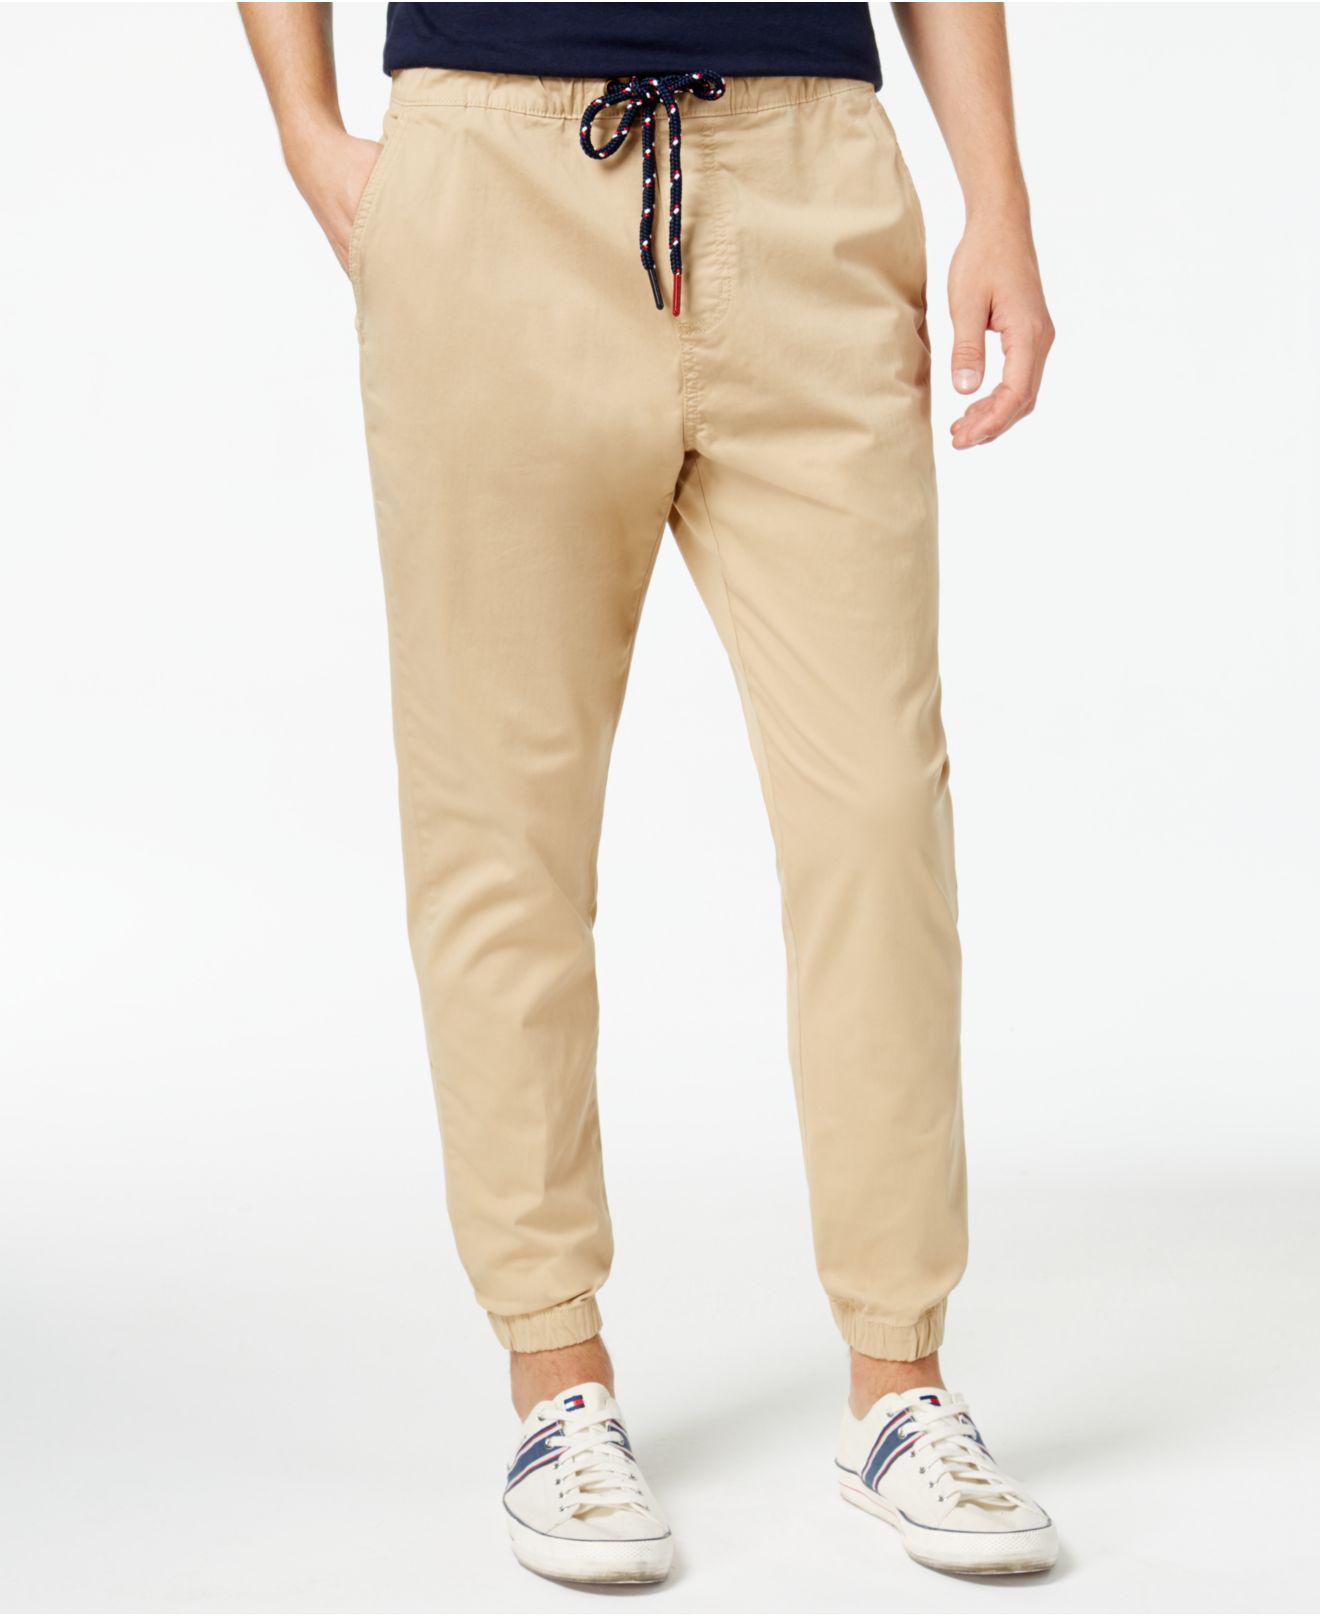 Tommy Hilfiger Khaki Pants Sell Cheapest, 55% OFF | asrehazir.com